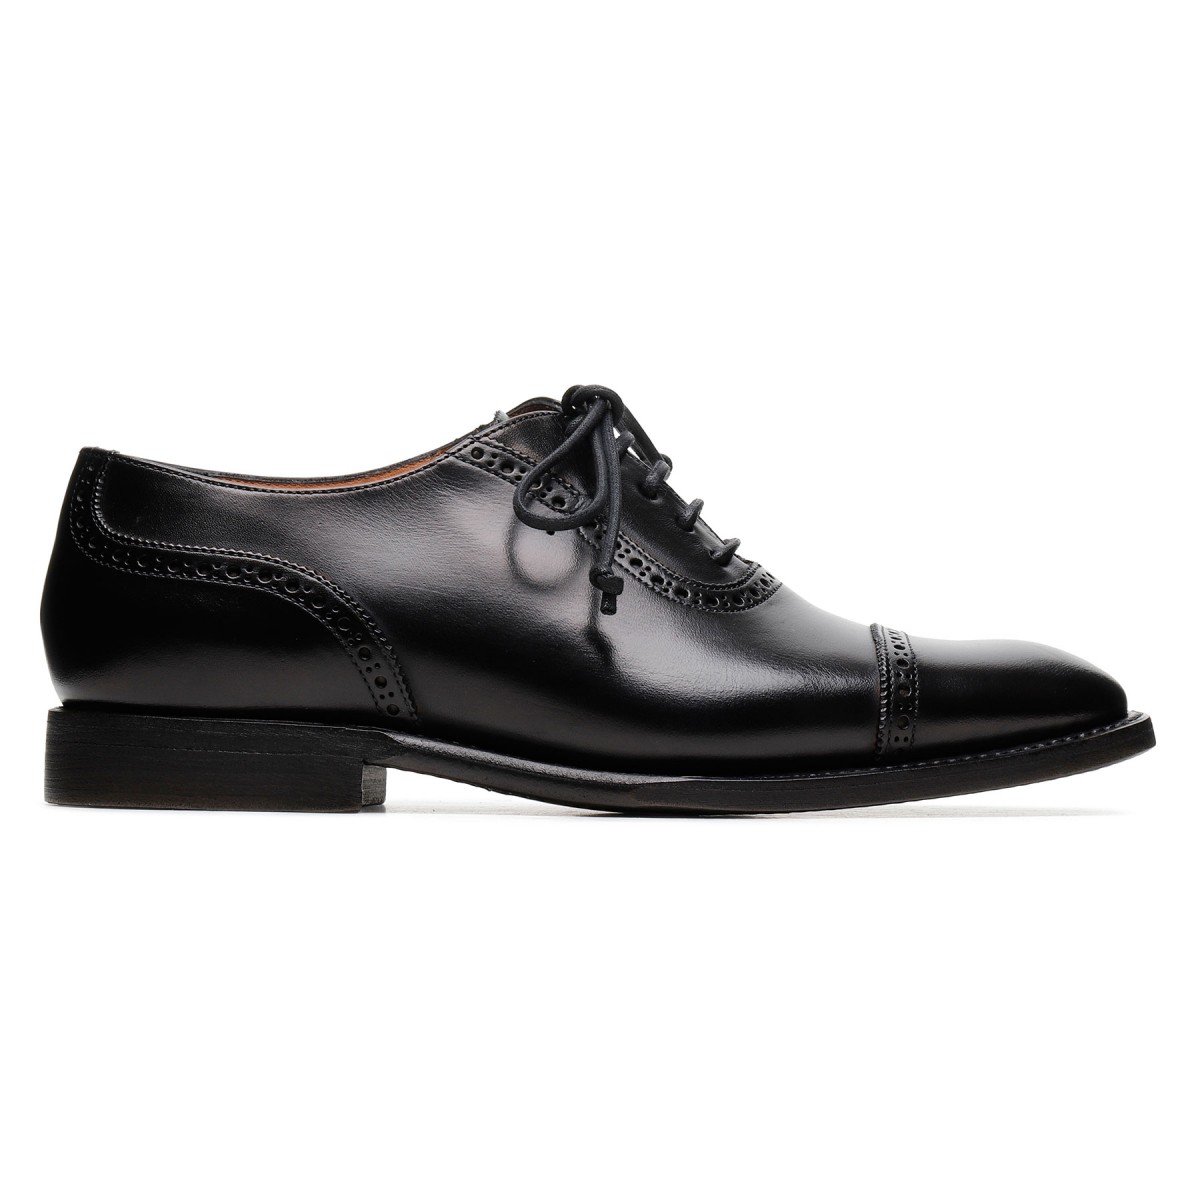 Lione black leather lace-up shoes